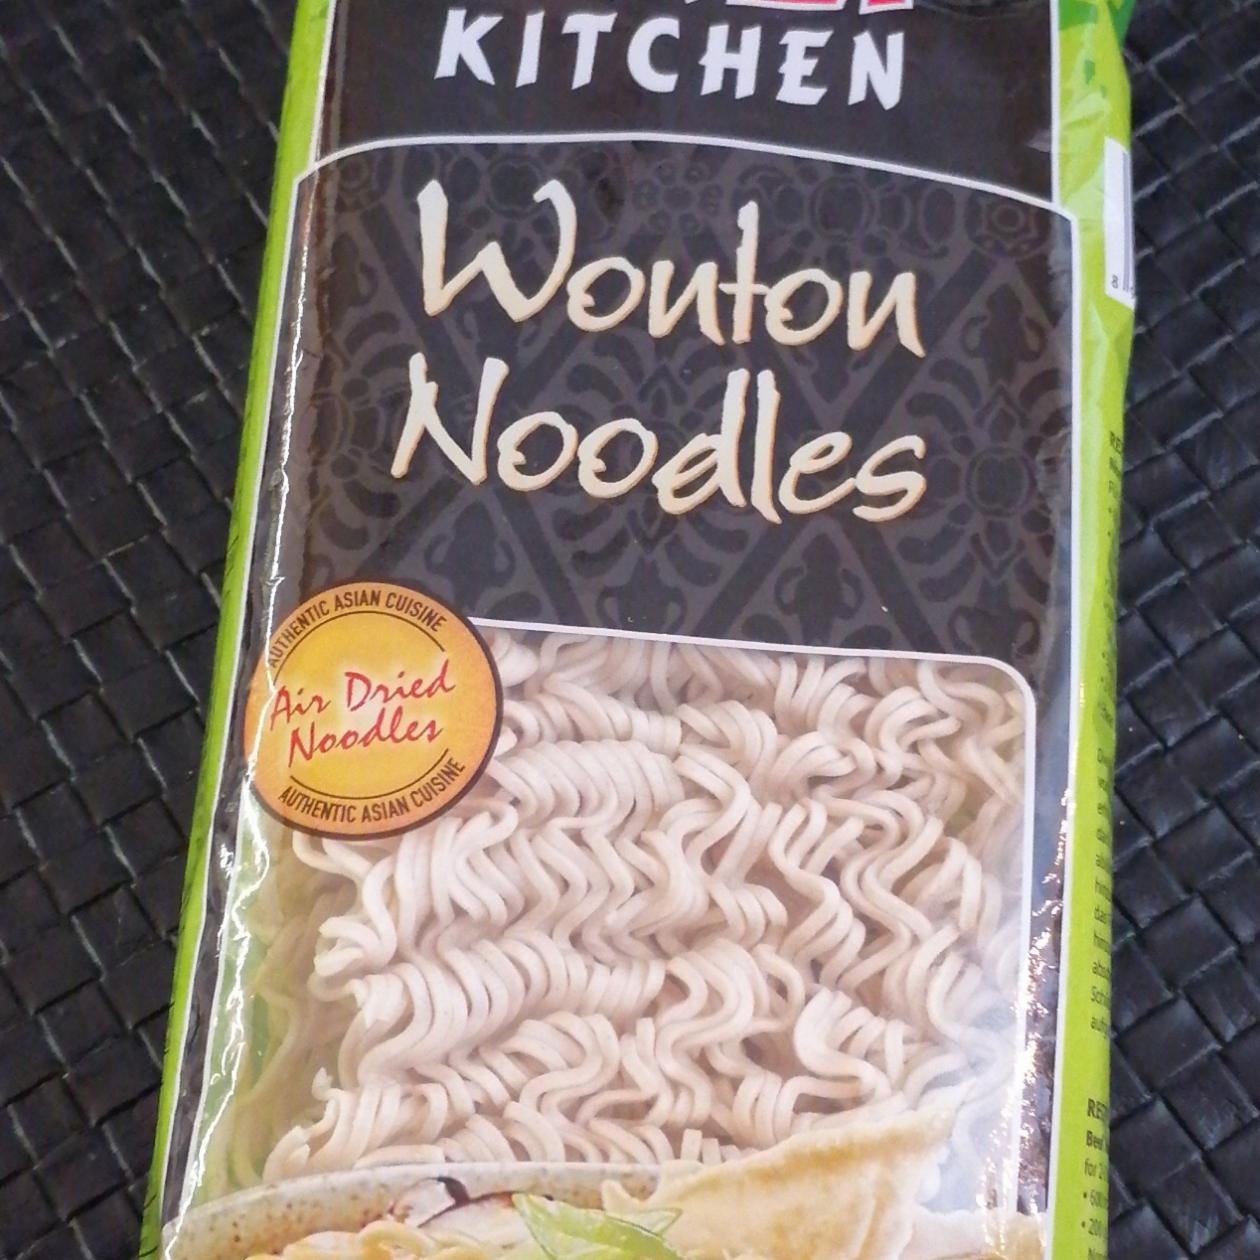 Fotografie - Wounton Noodles Bali kitchen